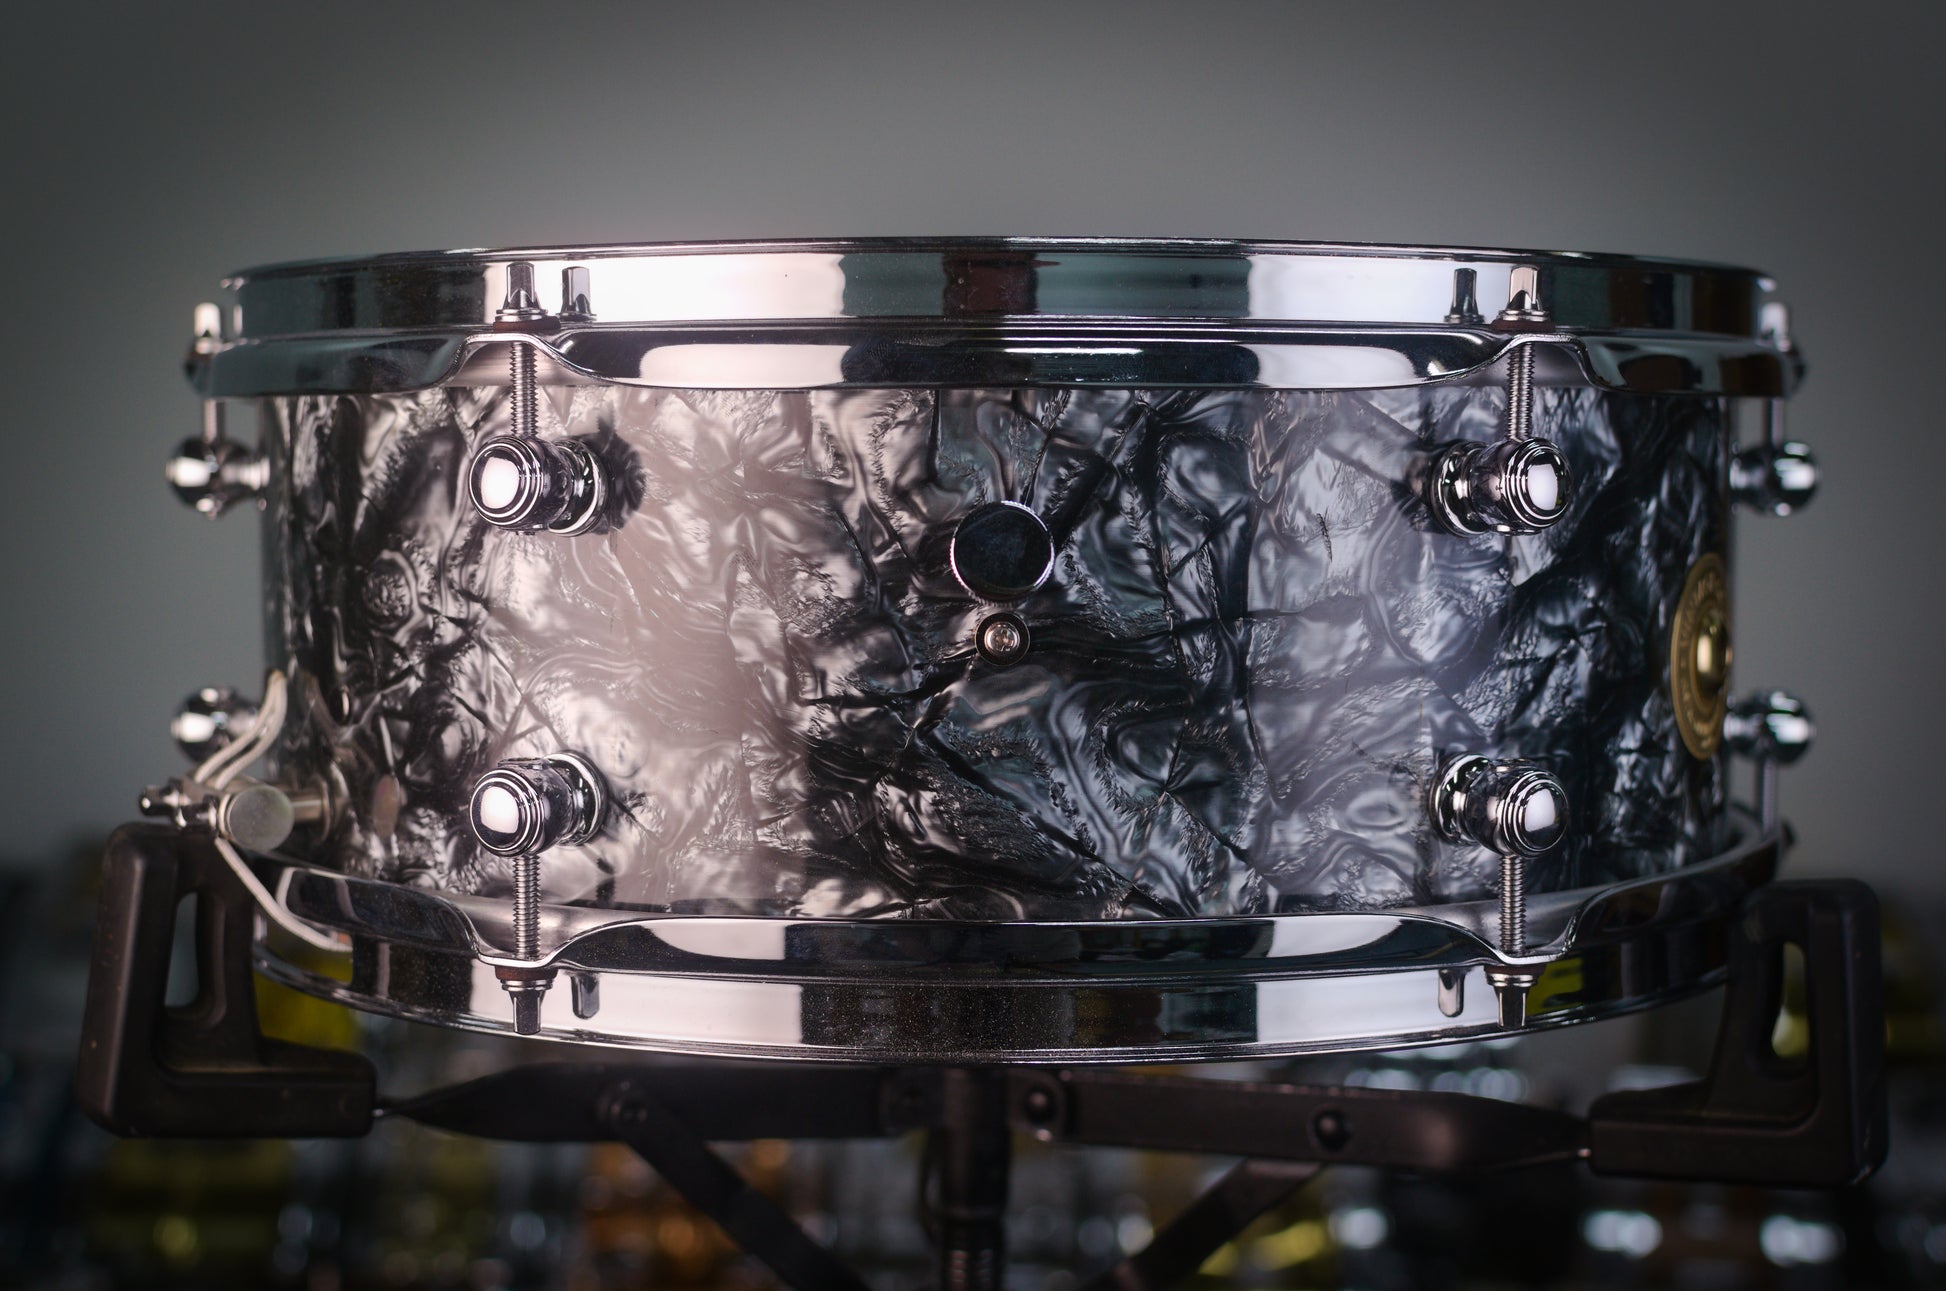 Vintage Soul 14" x 6" Black Diamond Pearl Snare Drum